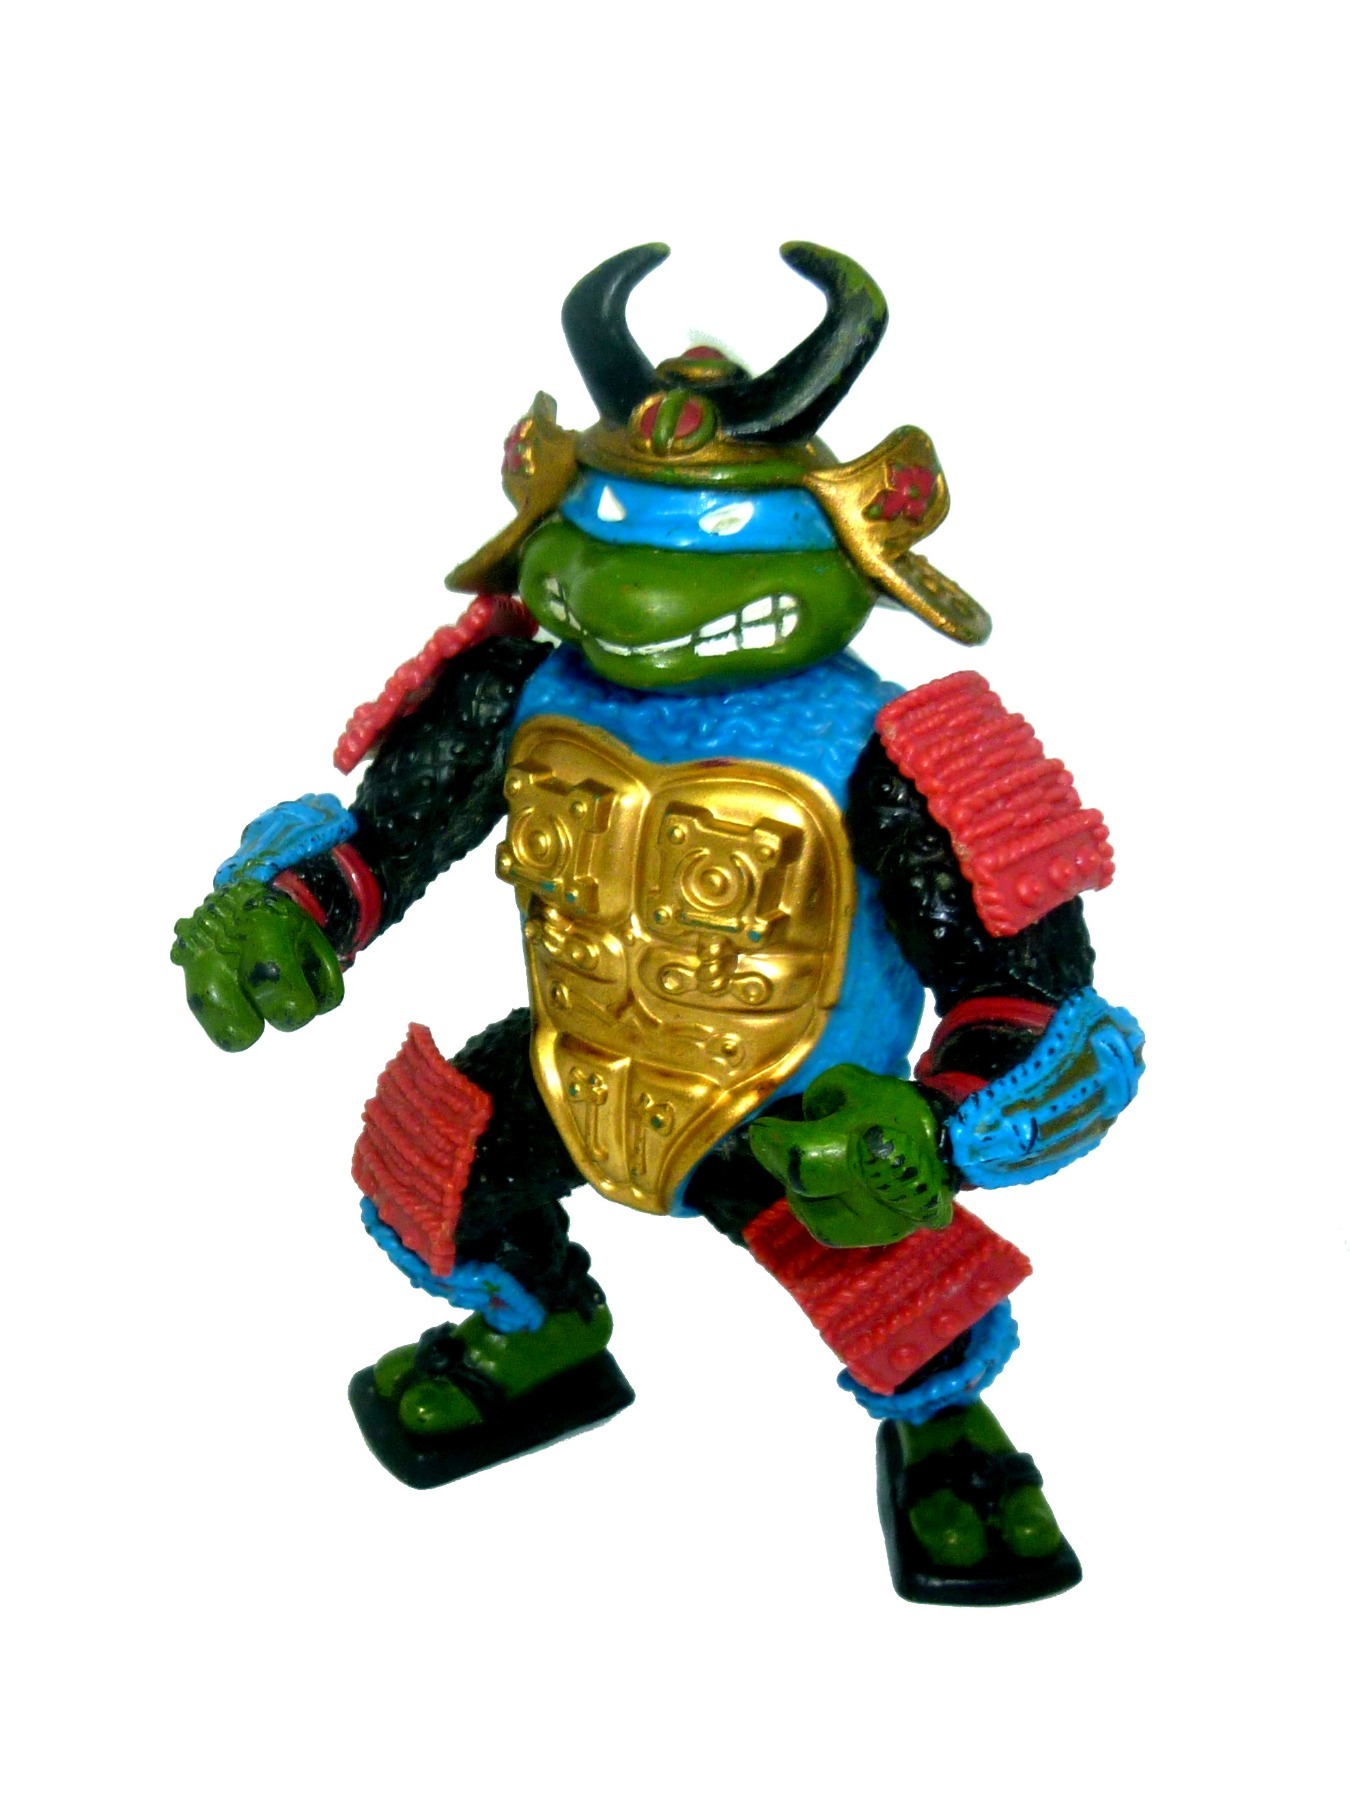 Leo The Sewer Samurai - Leonardo 1990 Mirage Studios / Playmates Toys 2